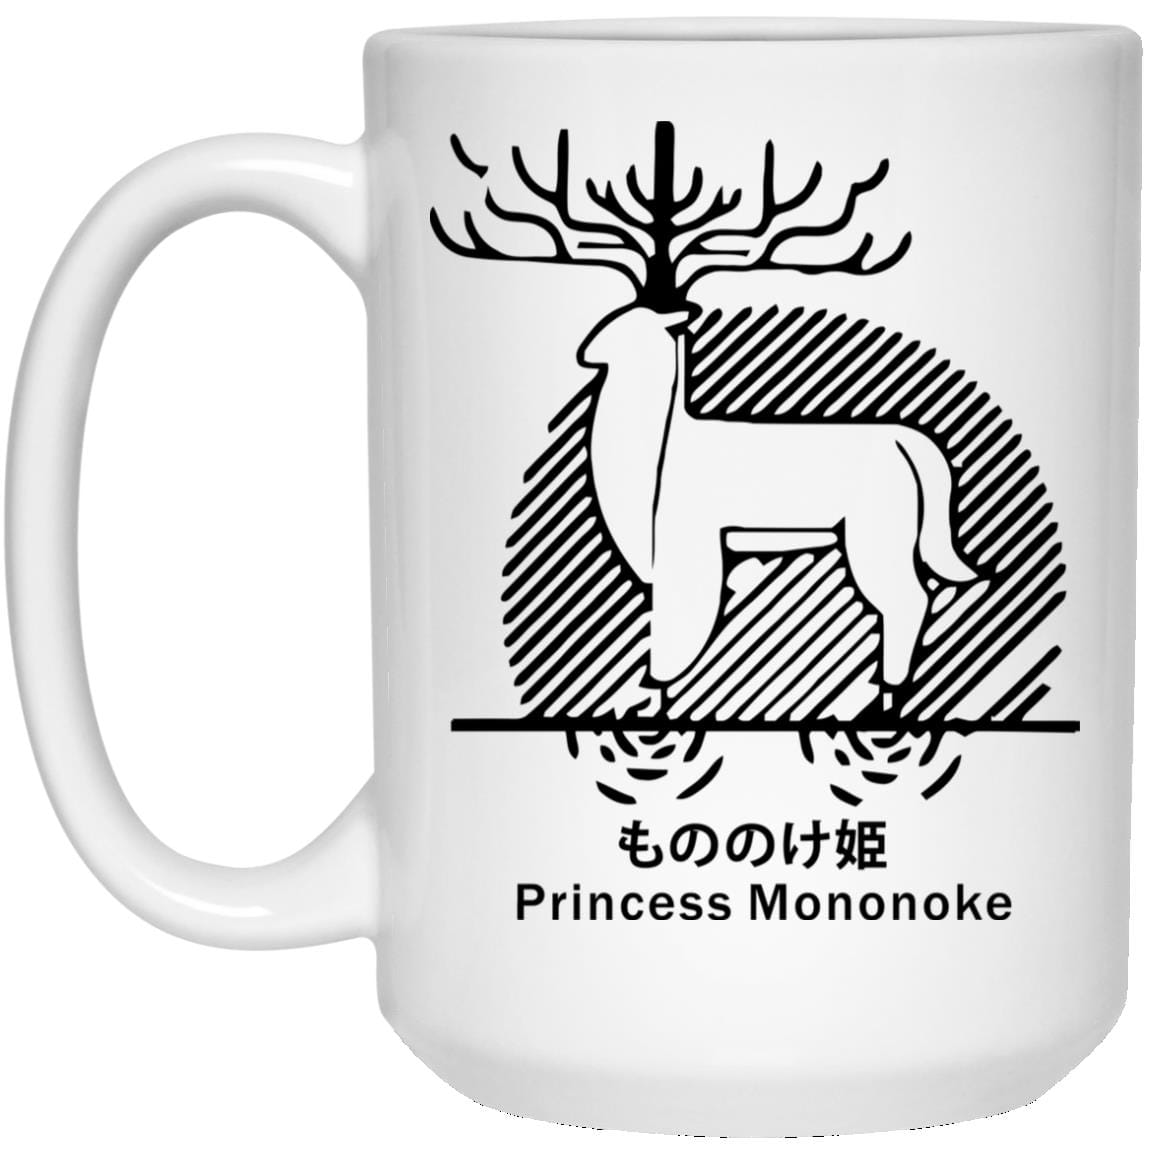 Princess Mononoke – Shishigami Line Art Mug